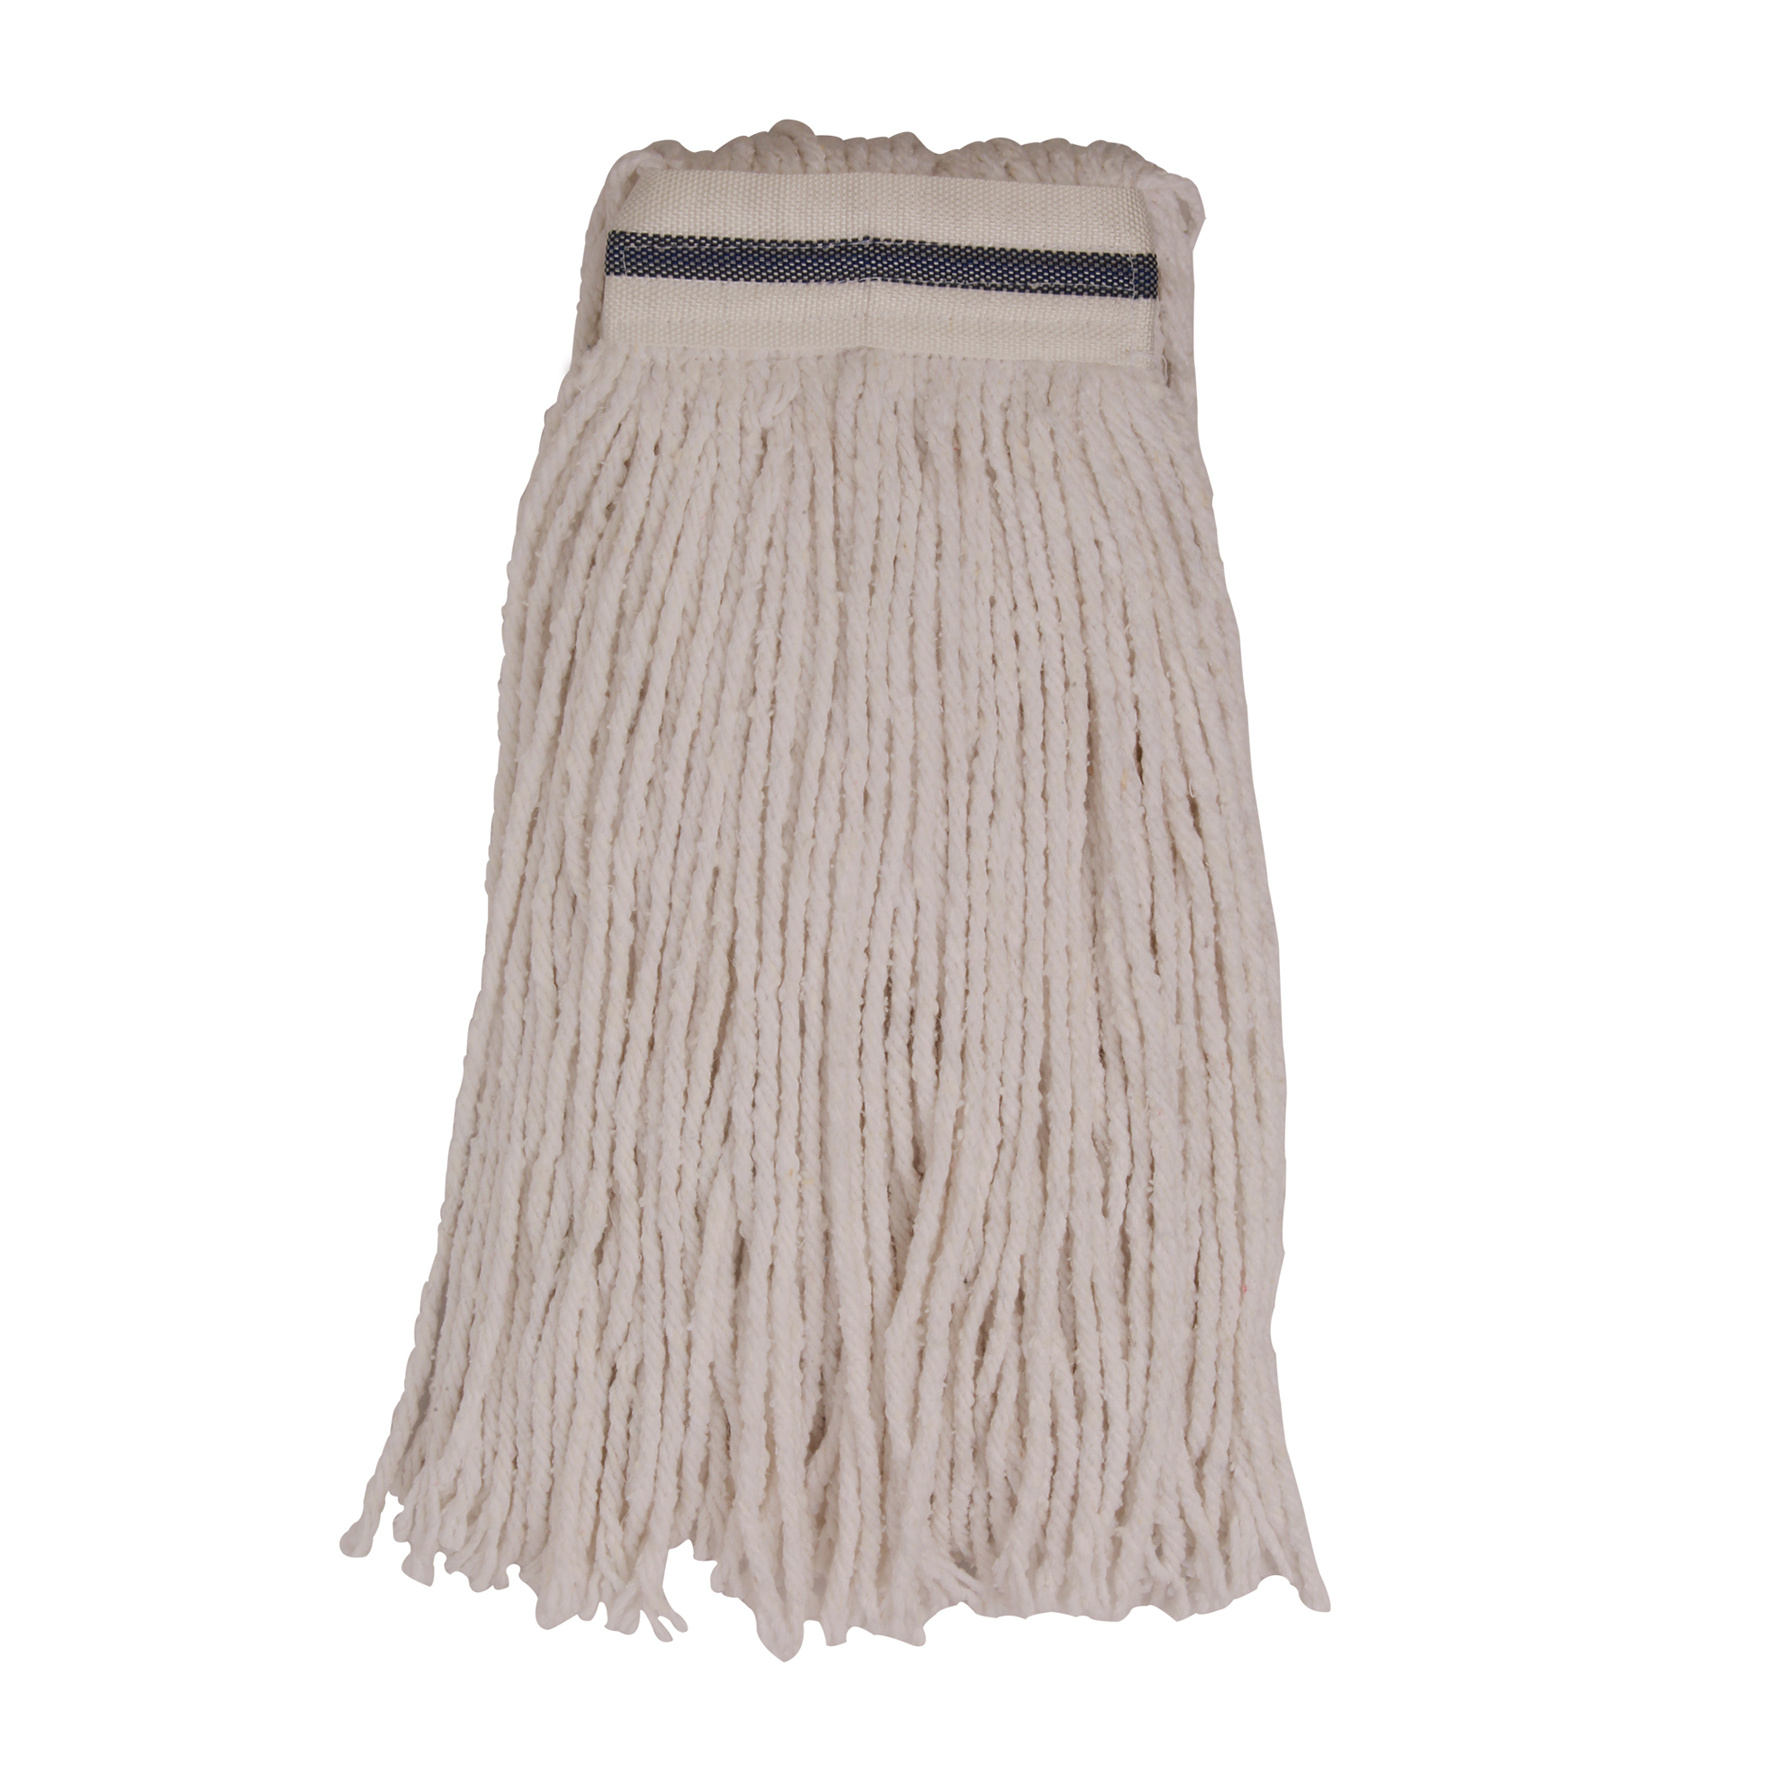 Professional cotton yarn mop 280 gr